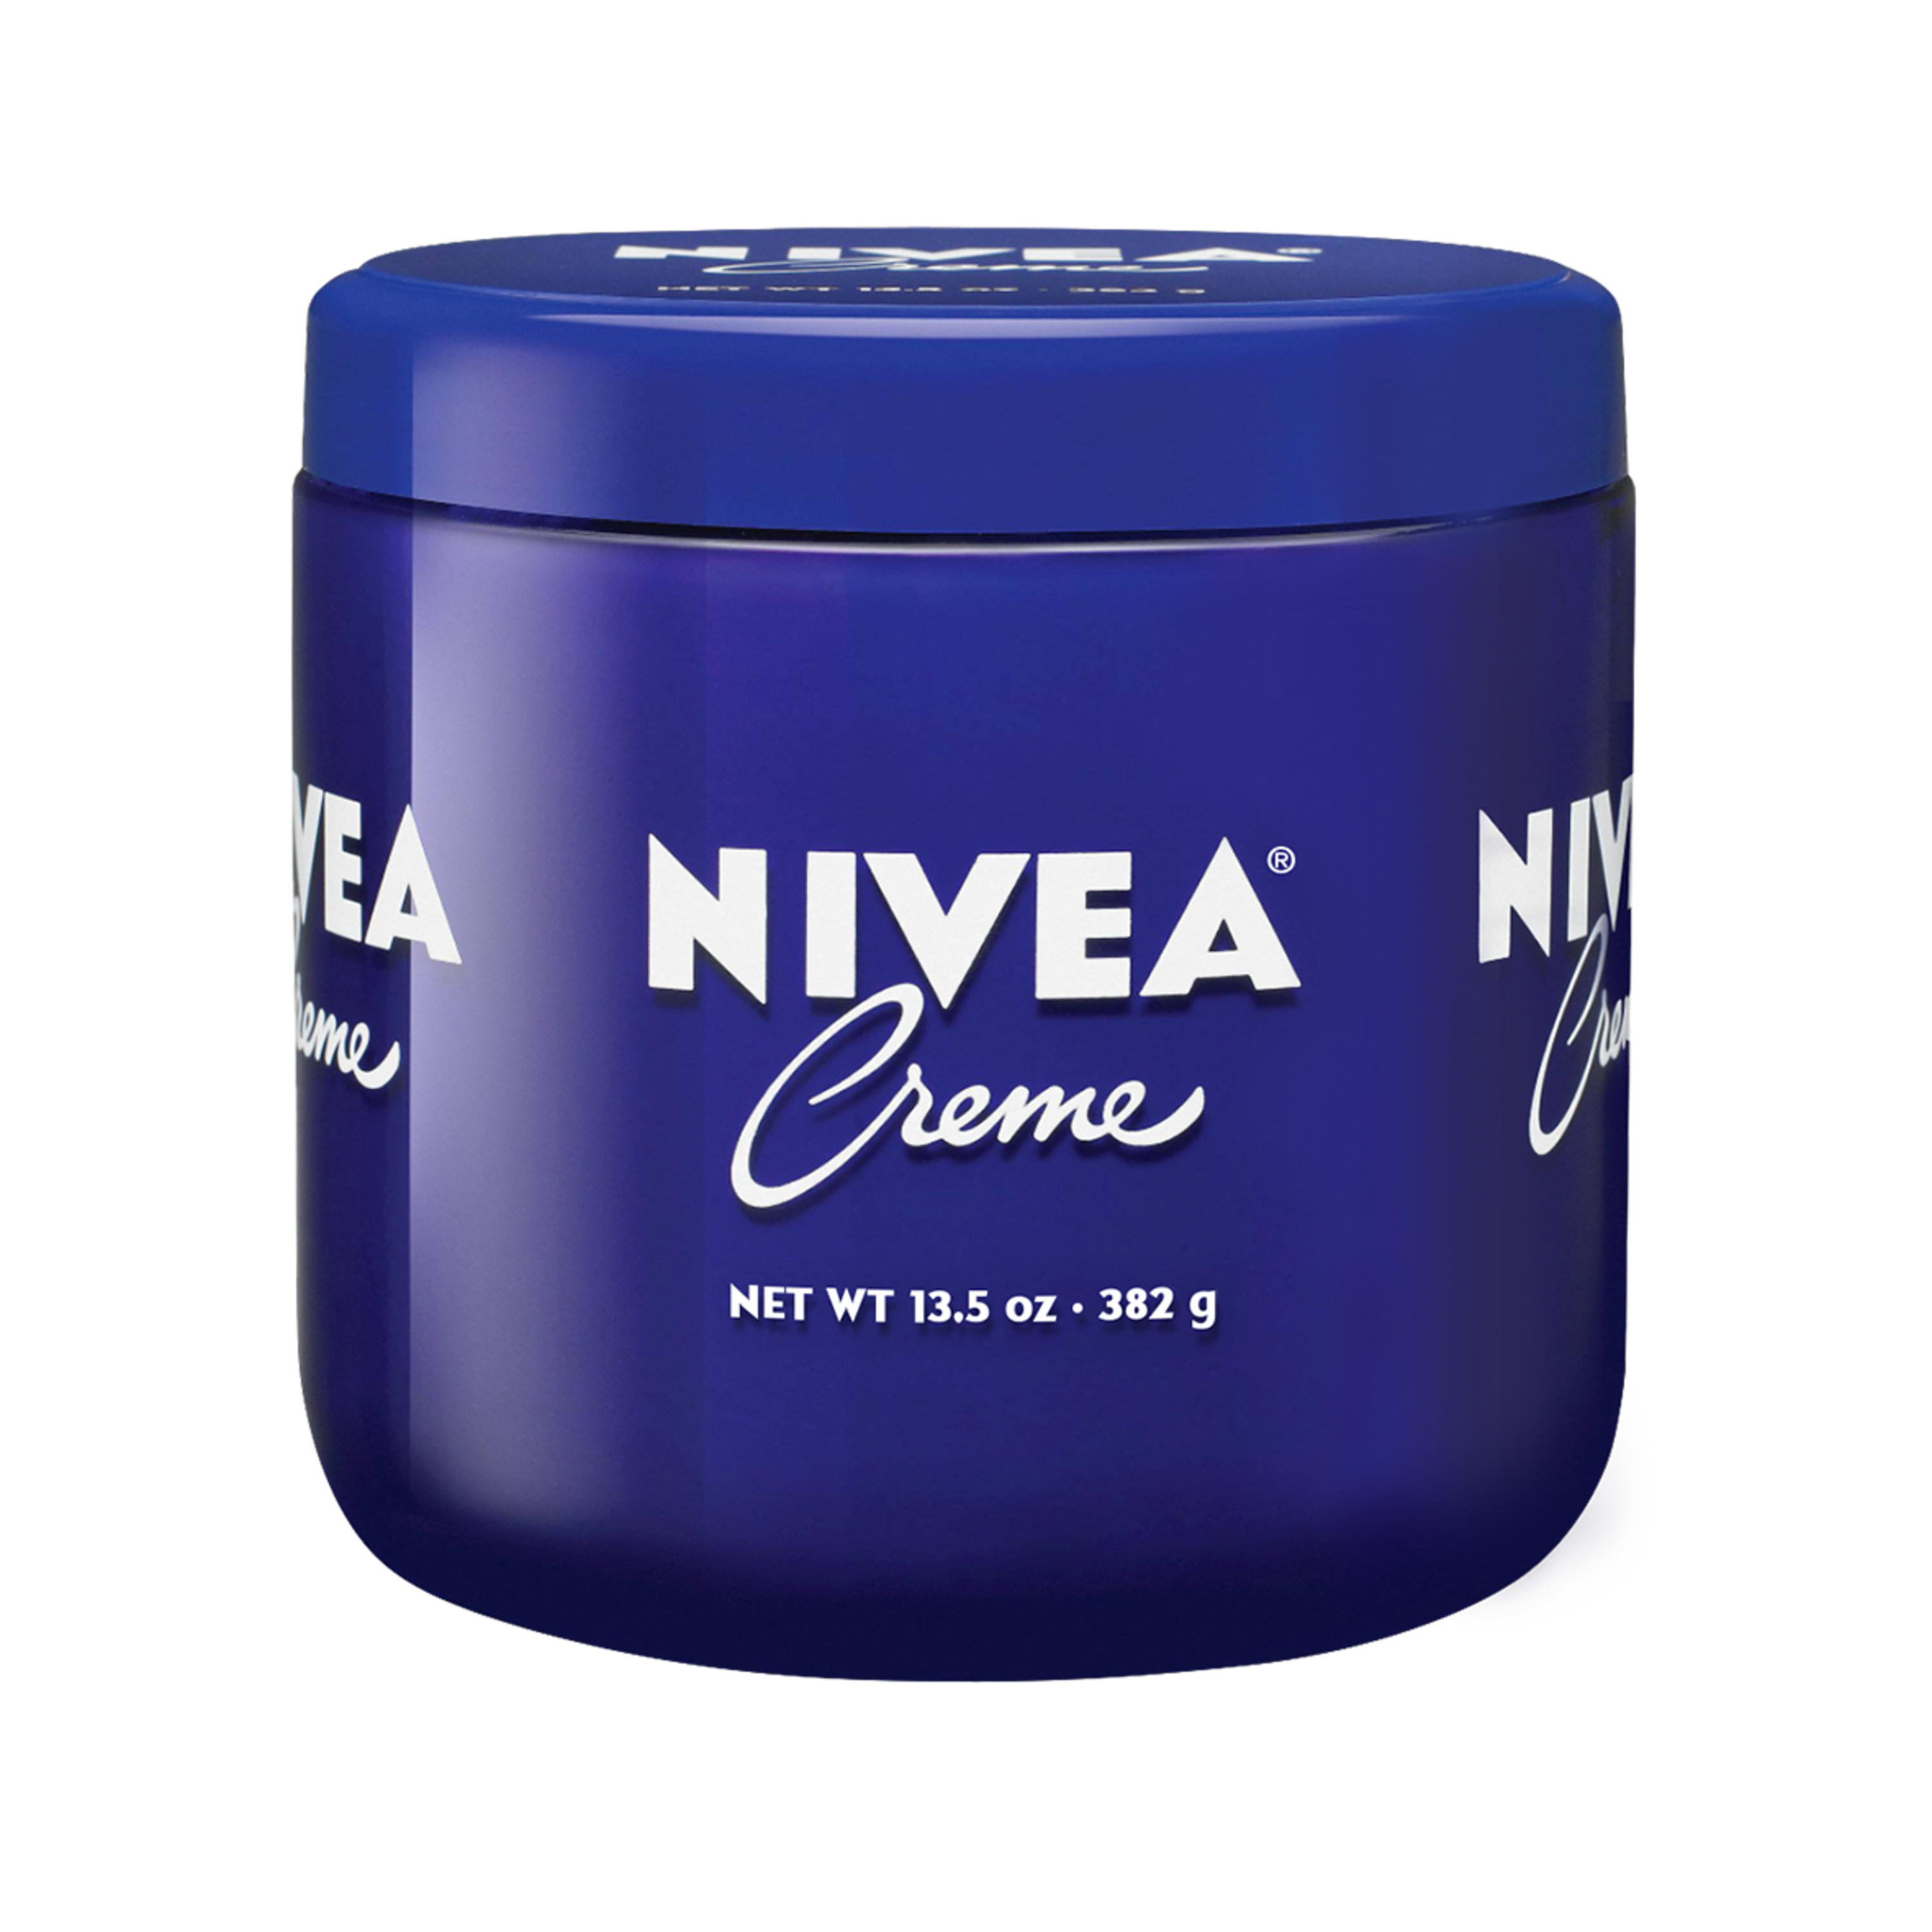 NIVEA Creme Body, Face and Hand Moisturizing Cream, 13.5 Oz Jar - image 1 of 11